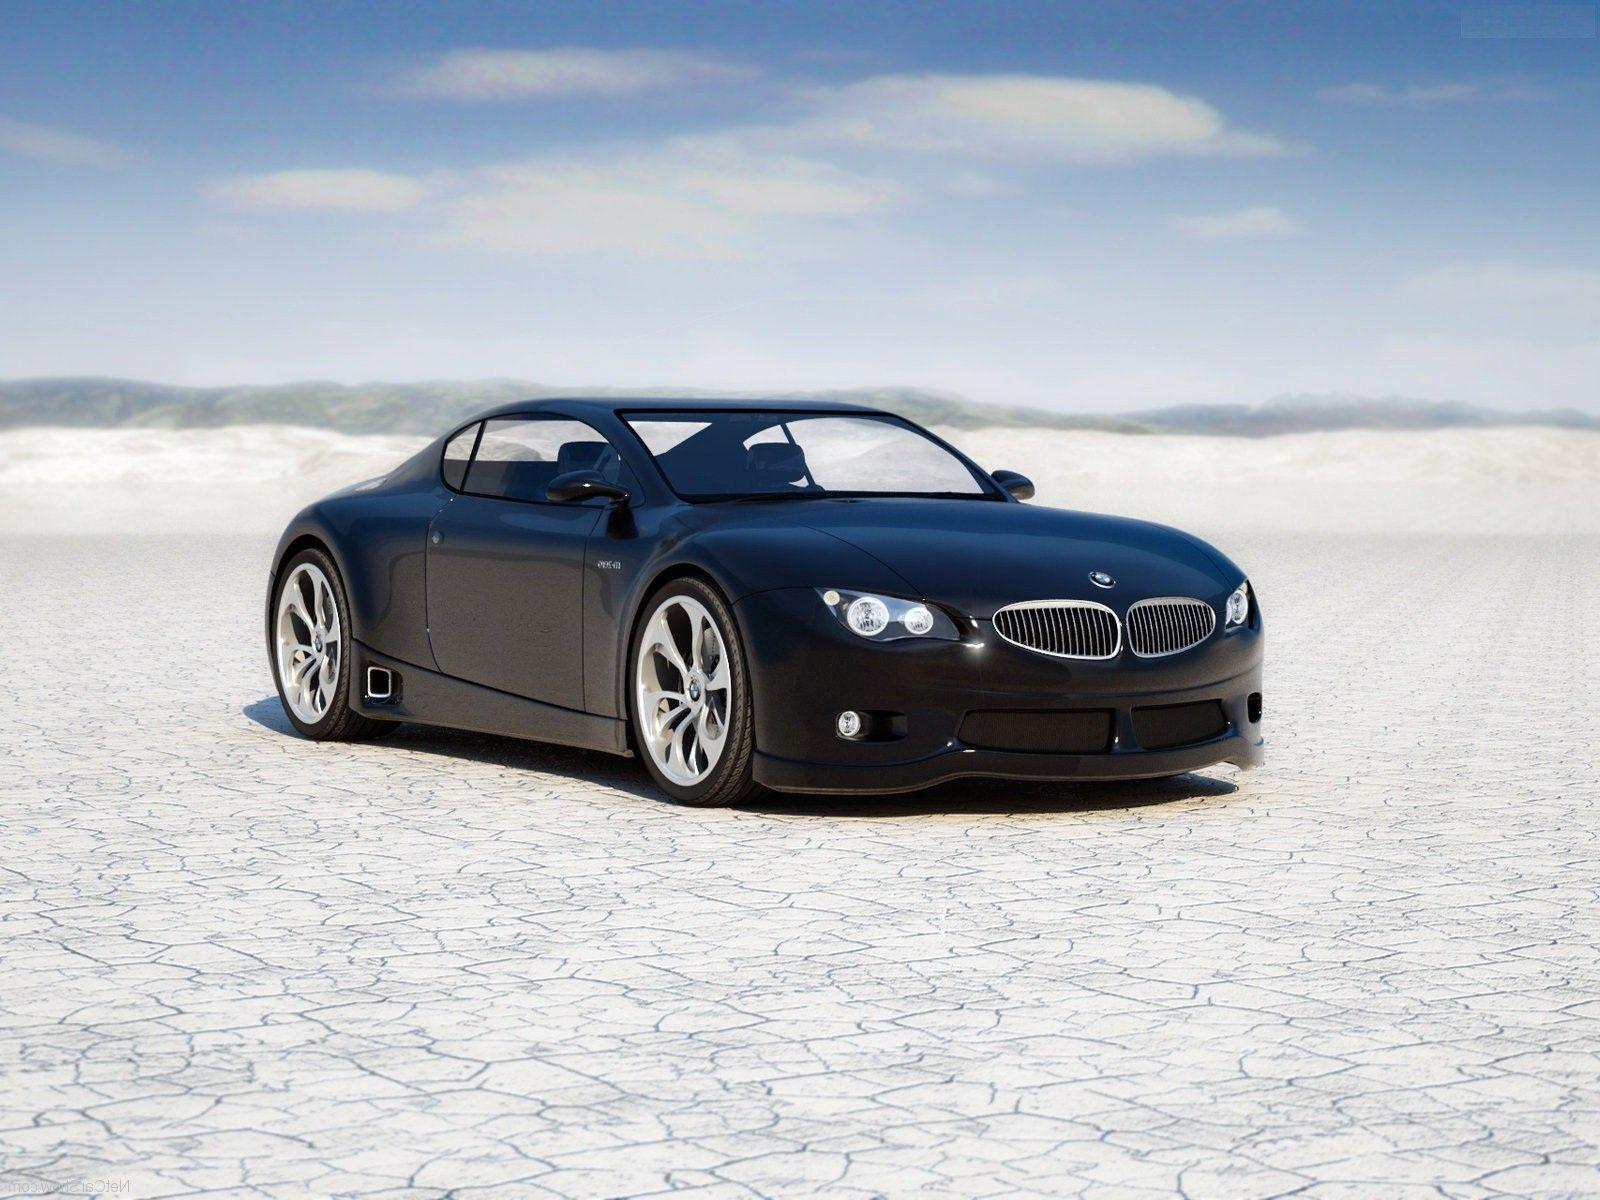 BMW Cars Wallpaper. Free Download HD Motors Latest New Image